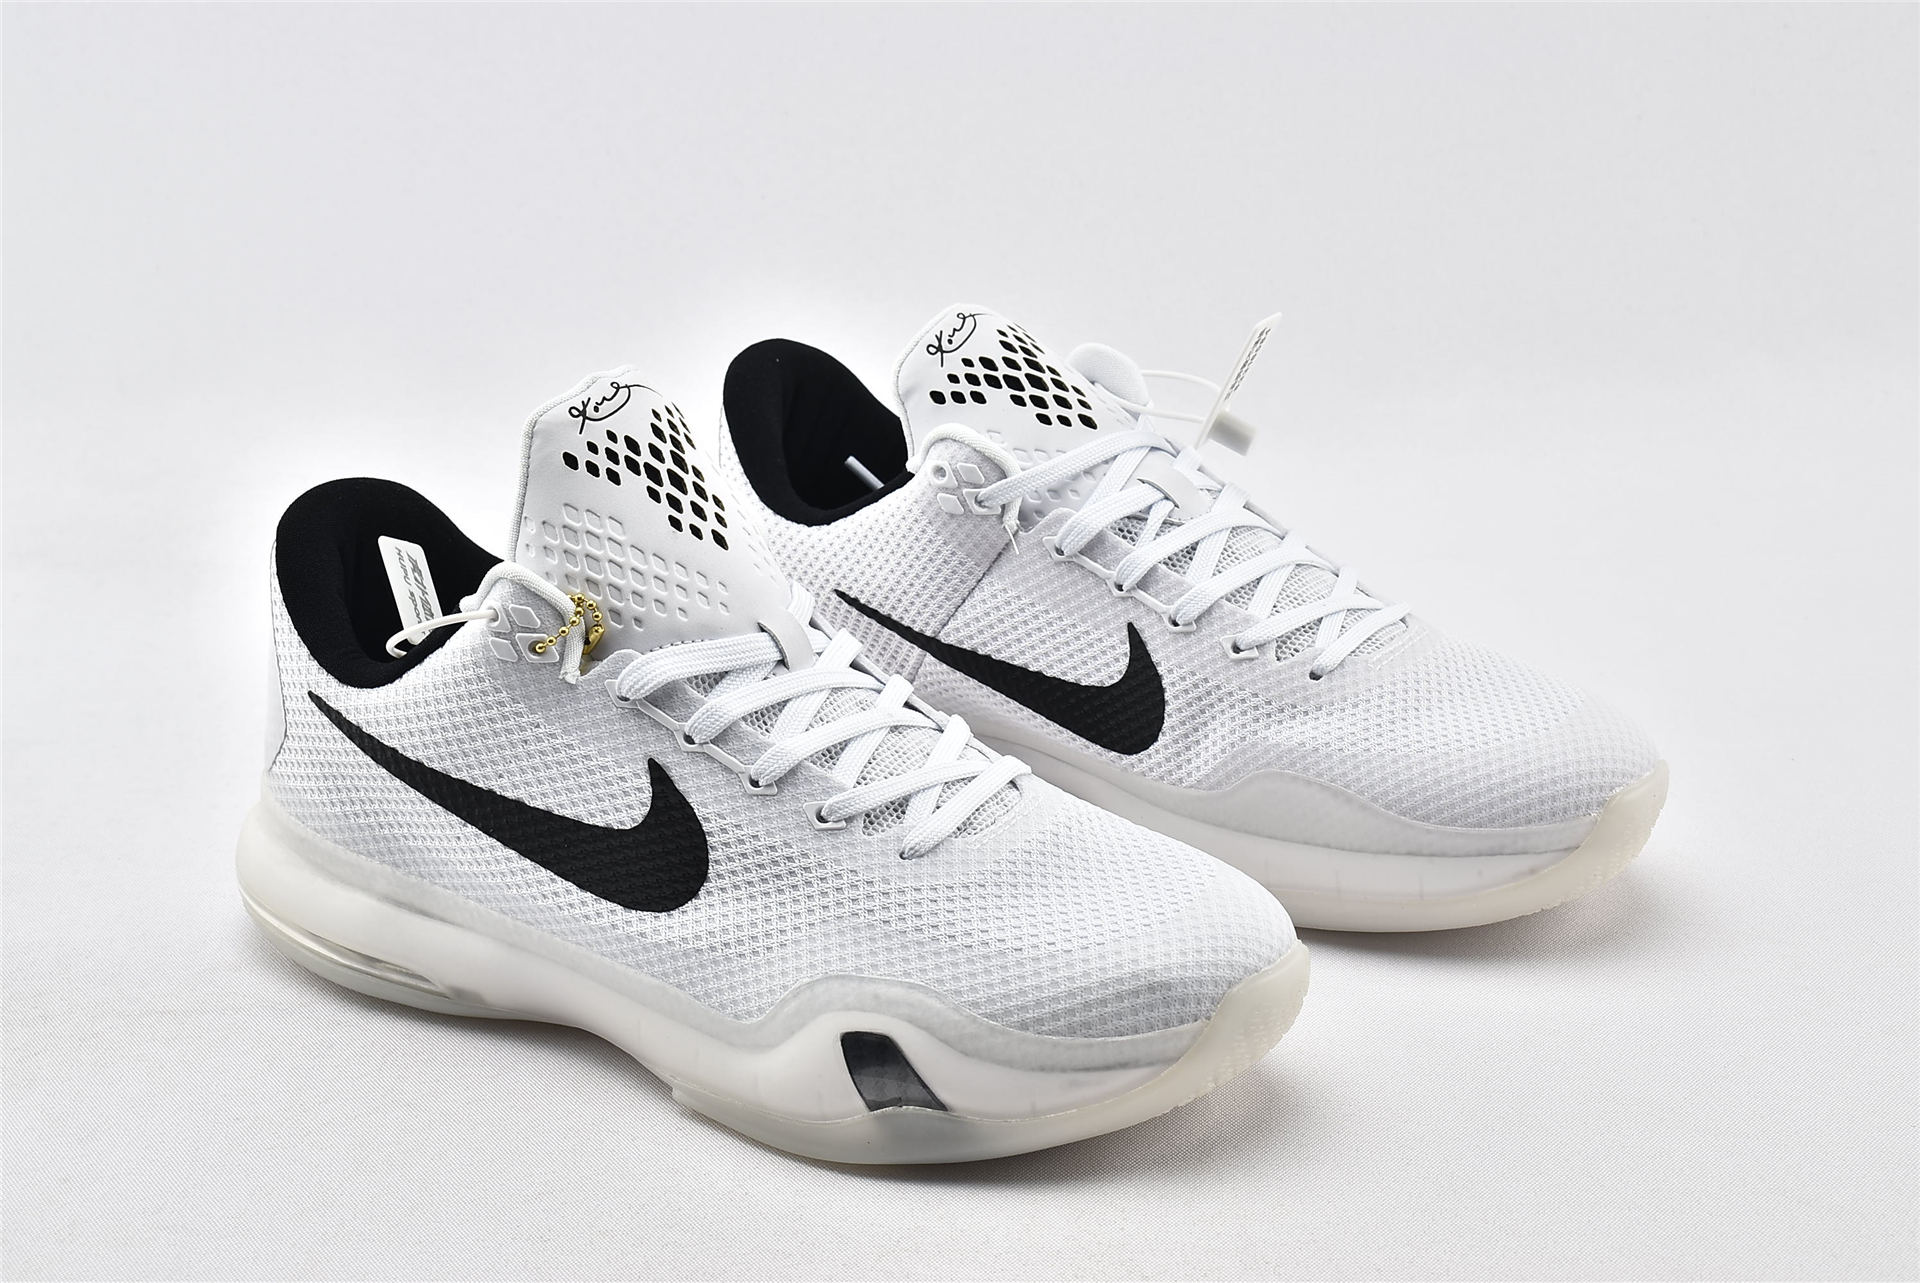 Nike Kobe 10 White/Black-Metallic Gold For Sale – The Sole Line